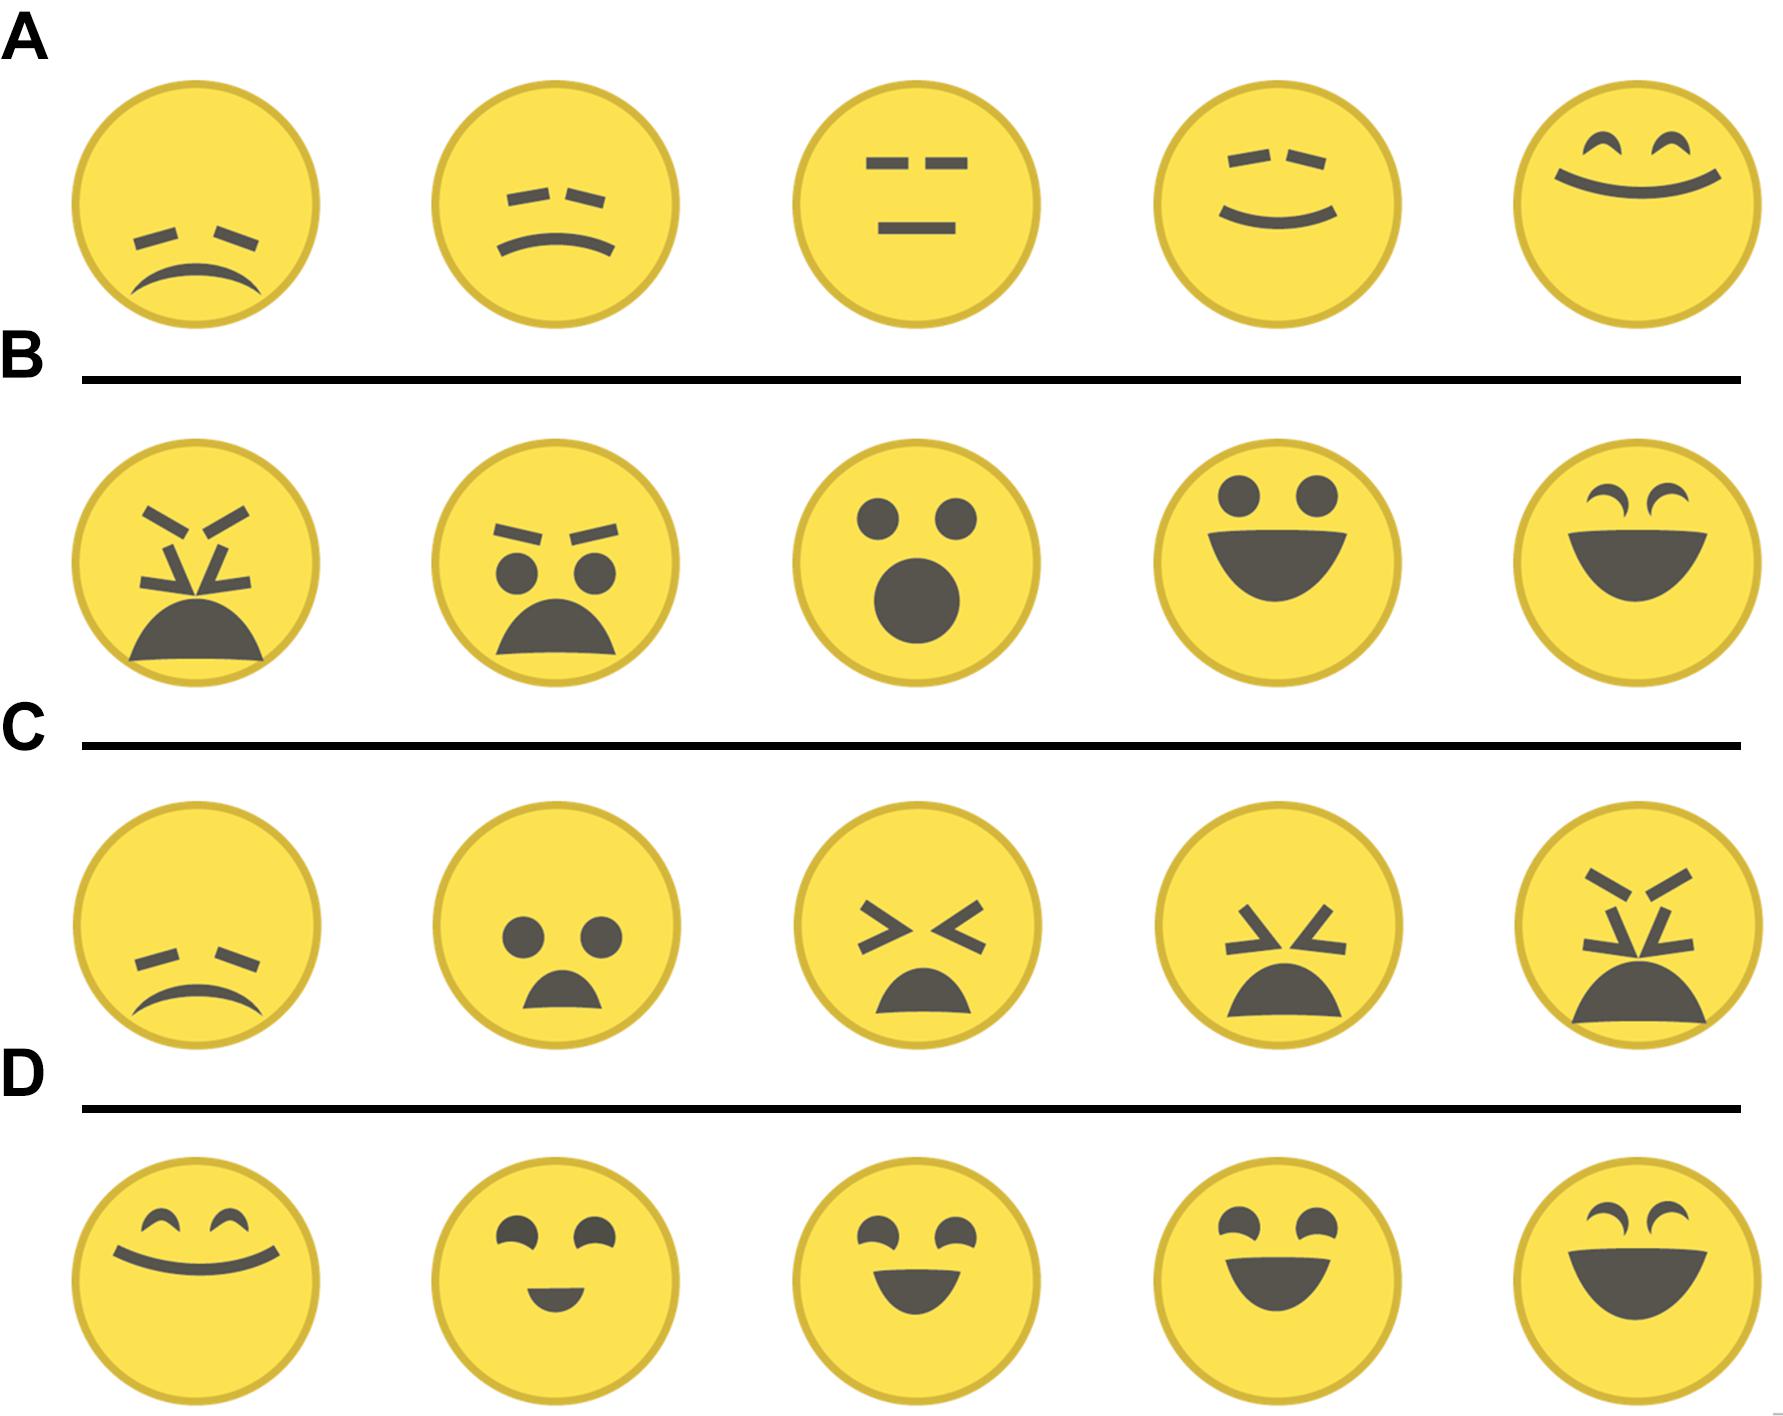 Pick a mood scale